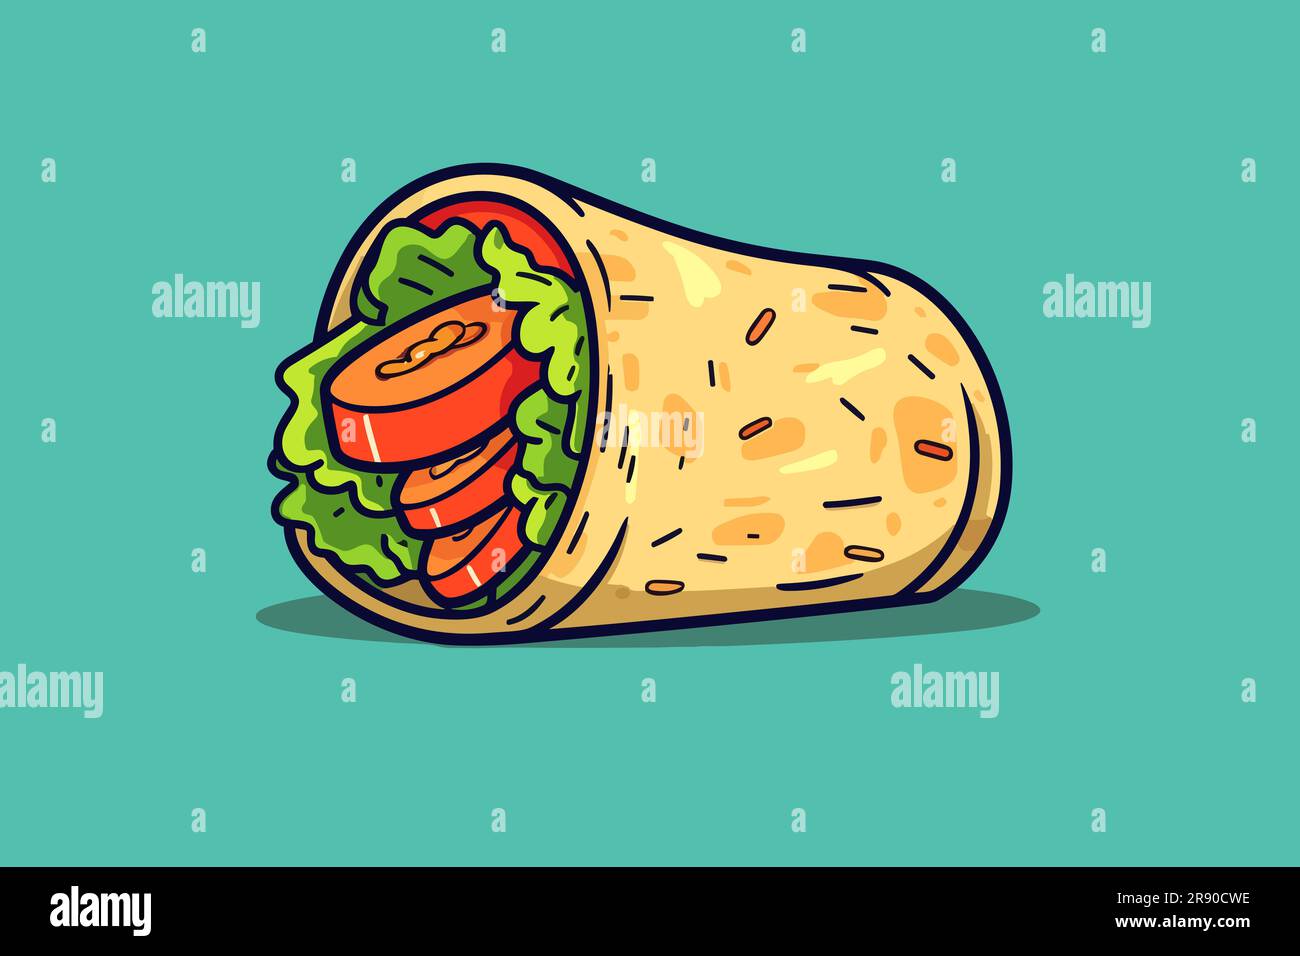 Chicken wrap. Chicken tortilla wrap hand-drawn illustration. Vector doodle style cartoon illustration Stock Photo